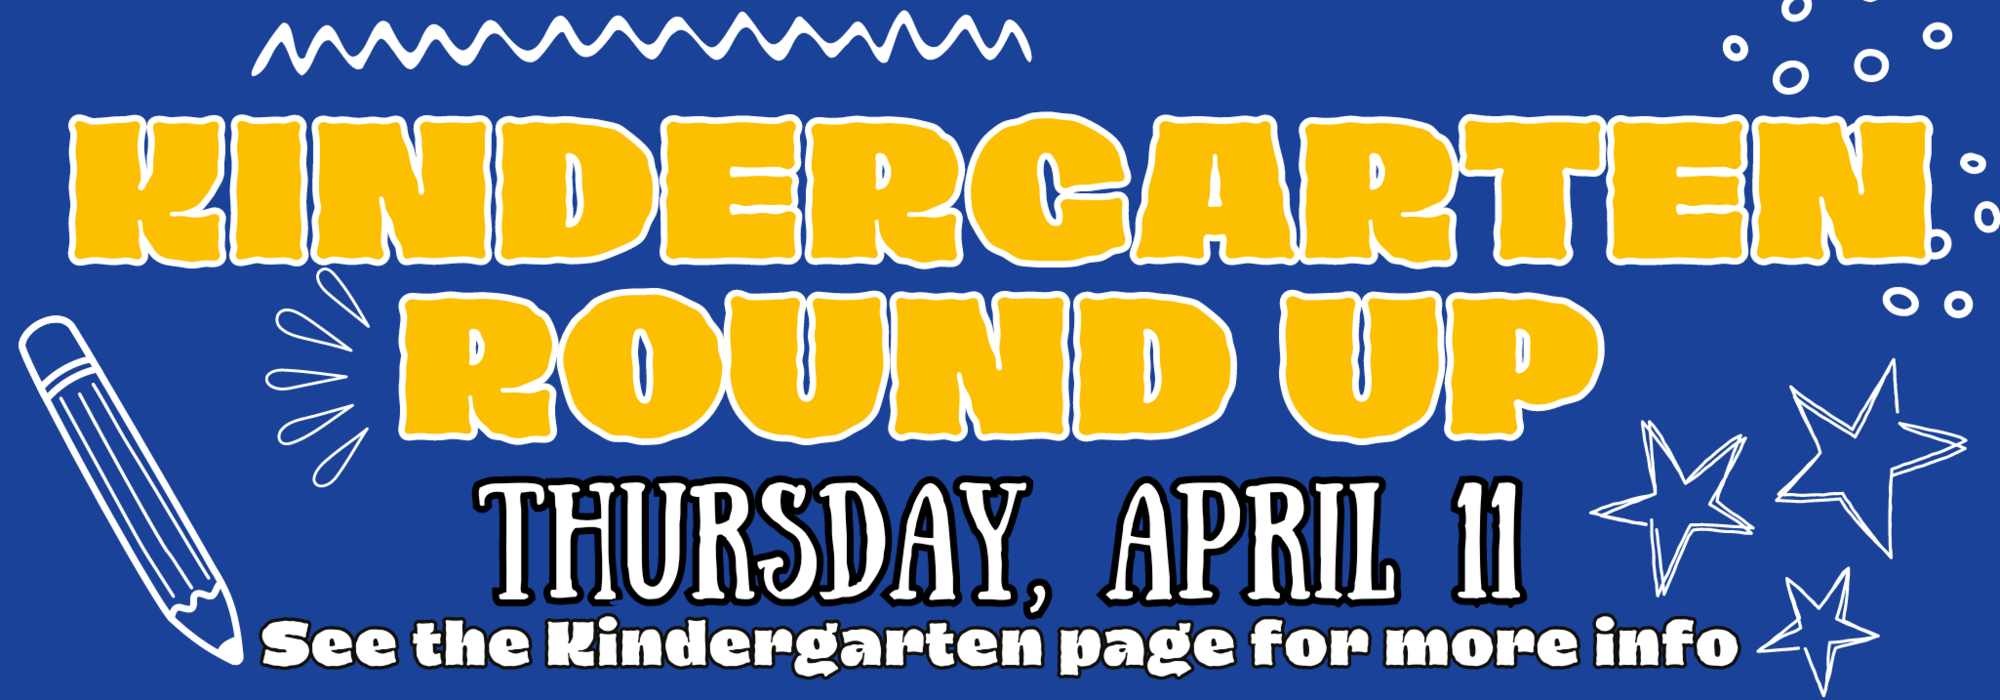 Kindergarten Round Up Thursday, April 11